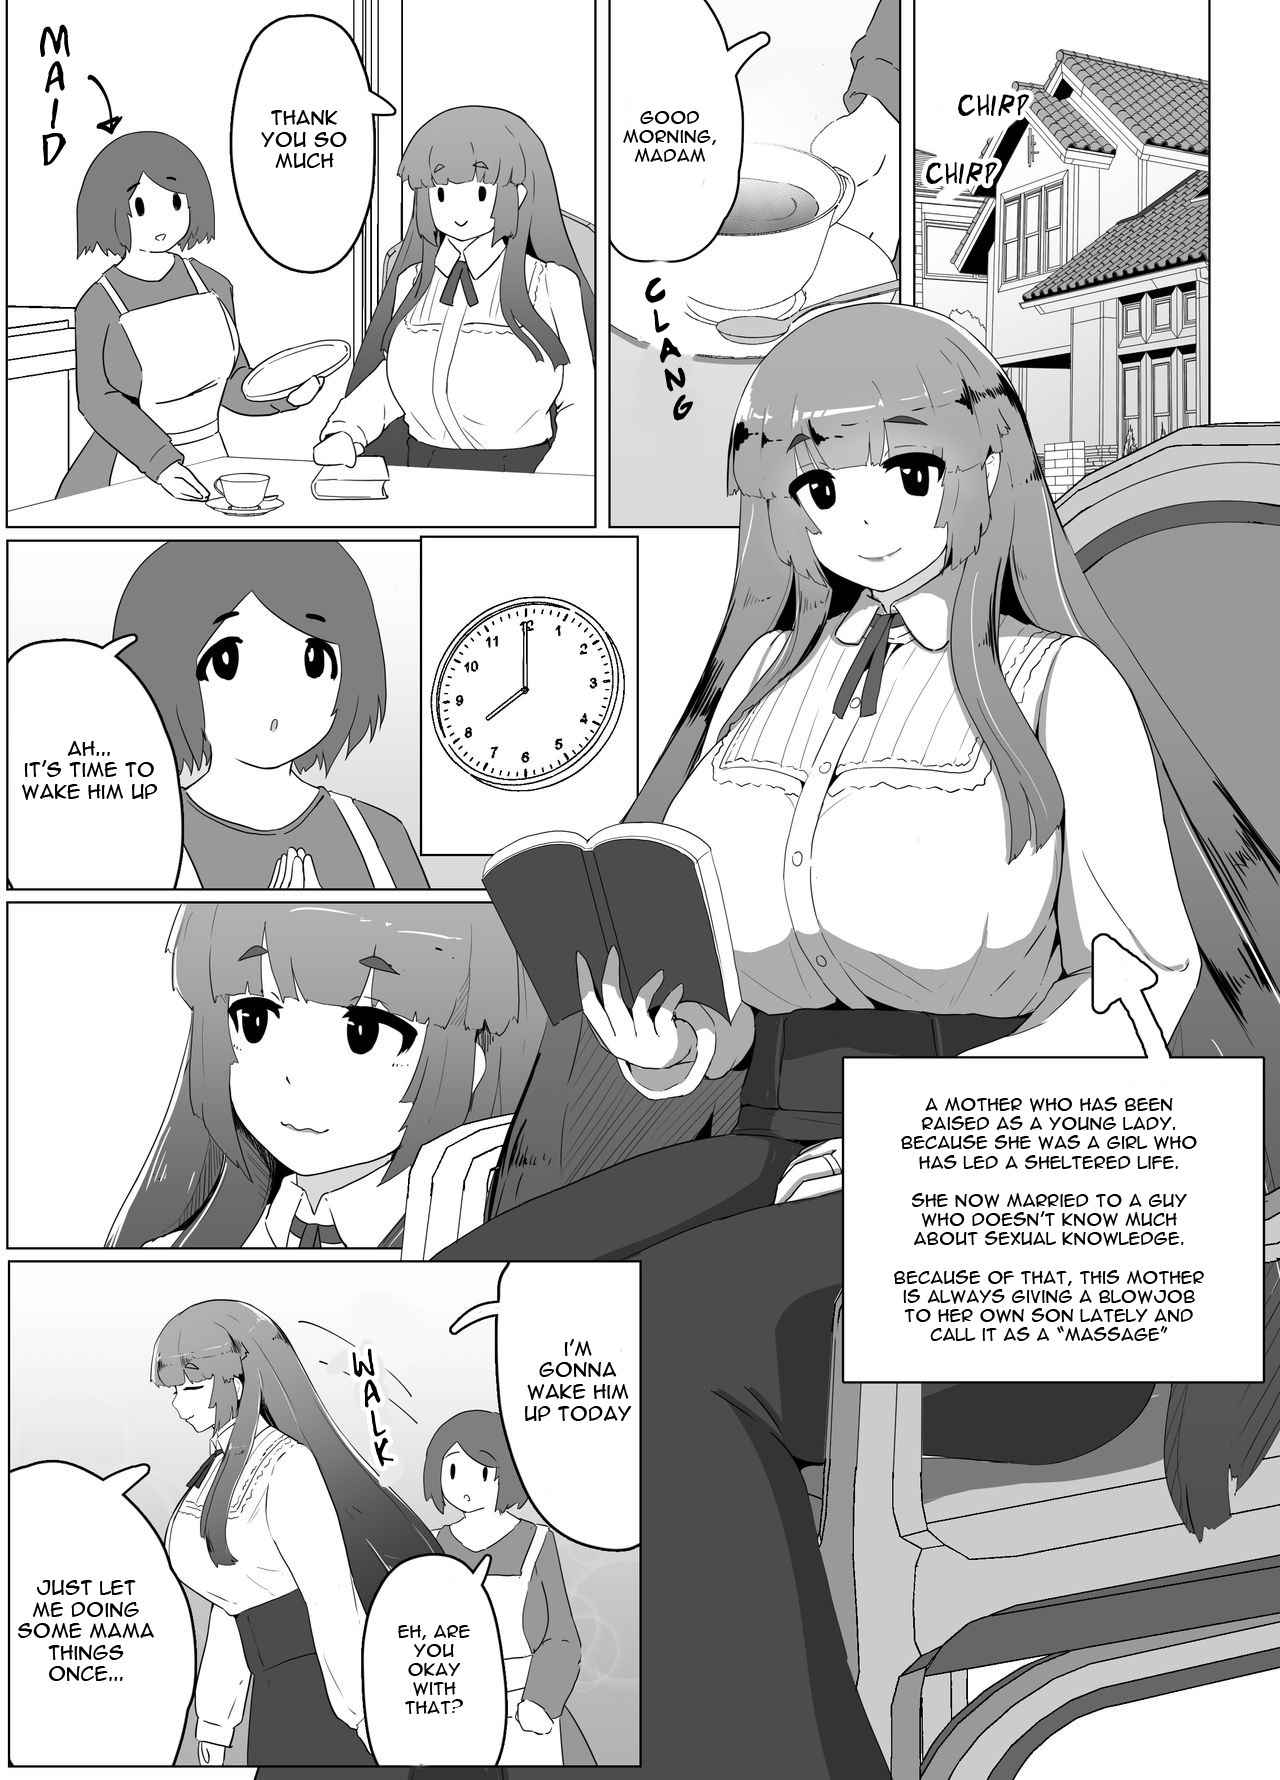 Manga Blowjob - Read blowjob Porn comics Â» Page 77 of 4848 Â» Hentai porns - Manga and  porncomics xxx 77 hentai comics